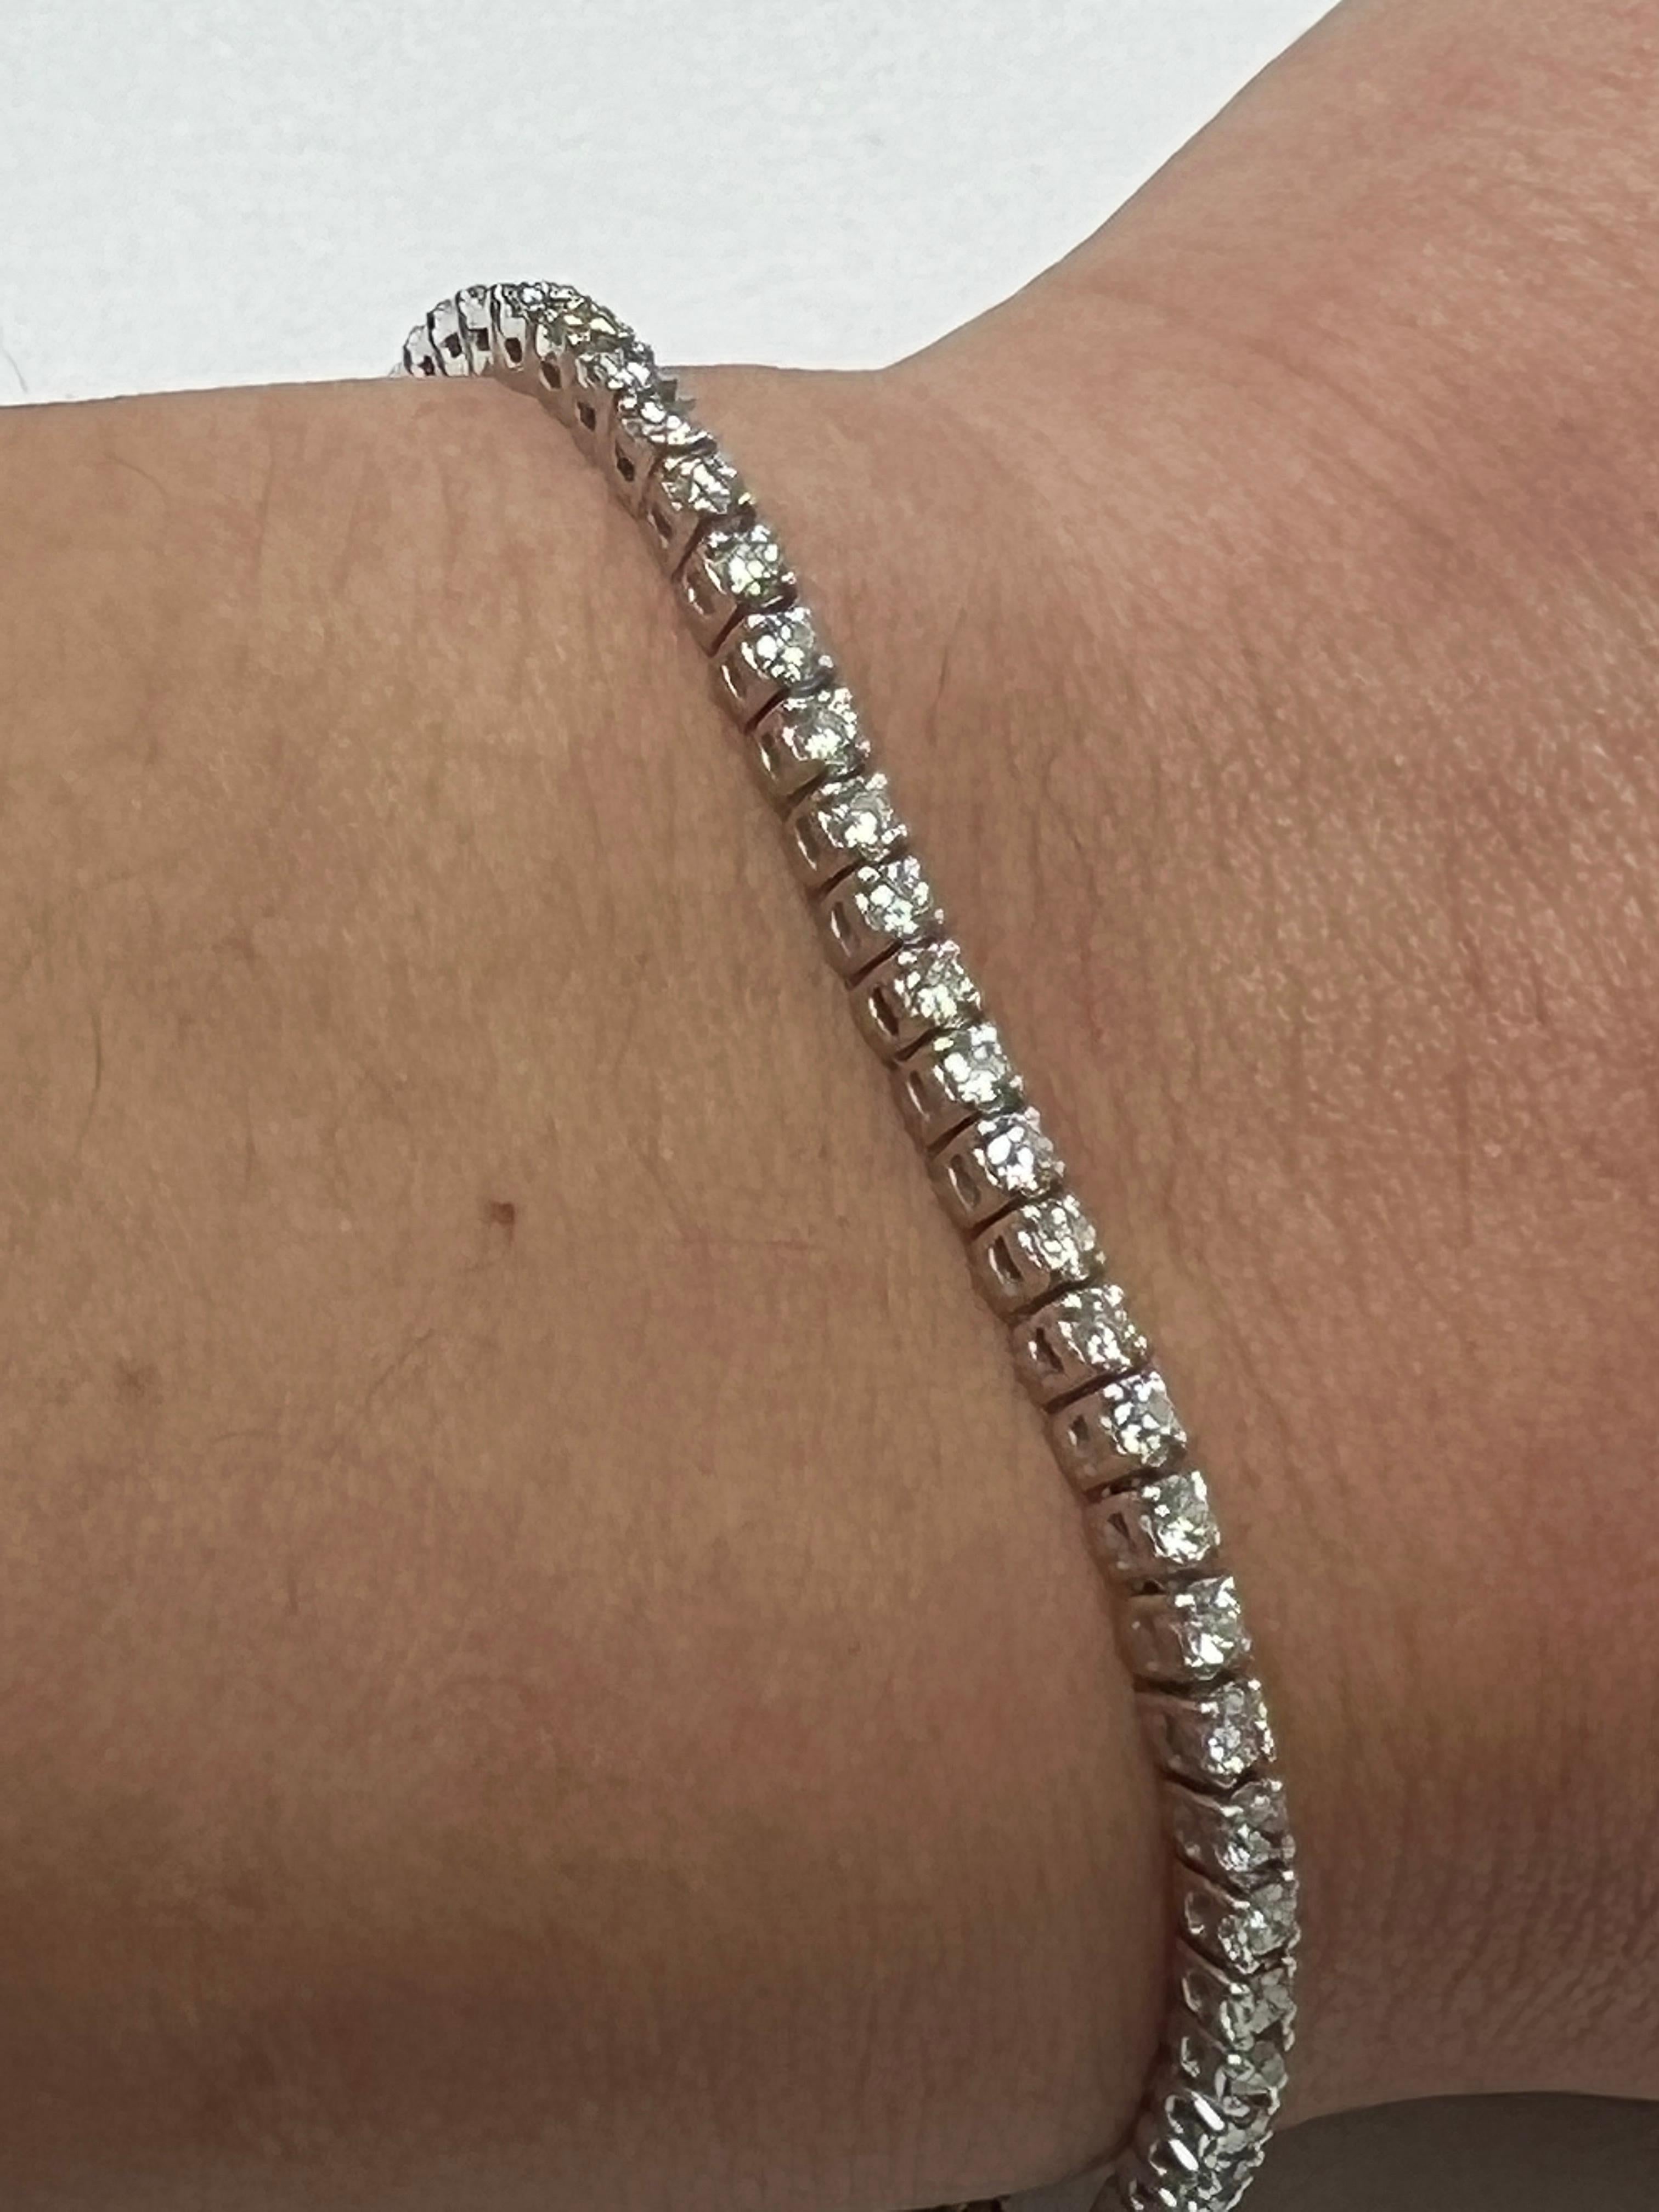 3.5 carat diamond bracelet